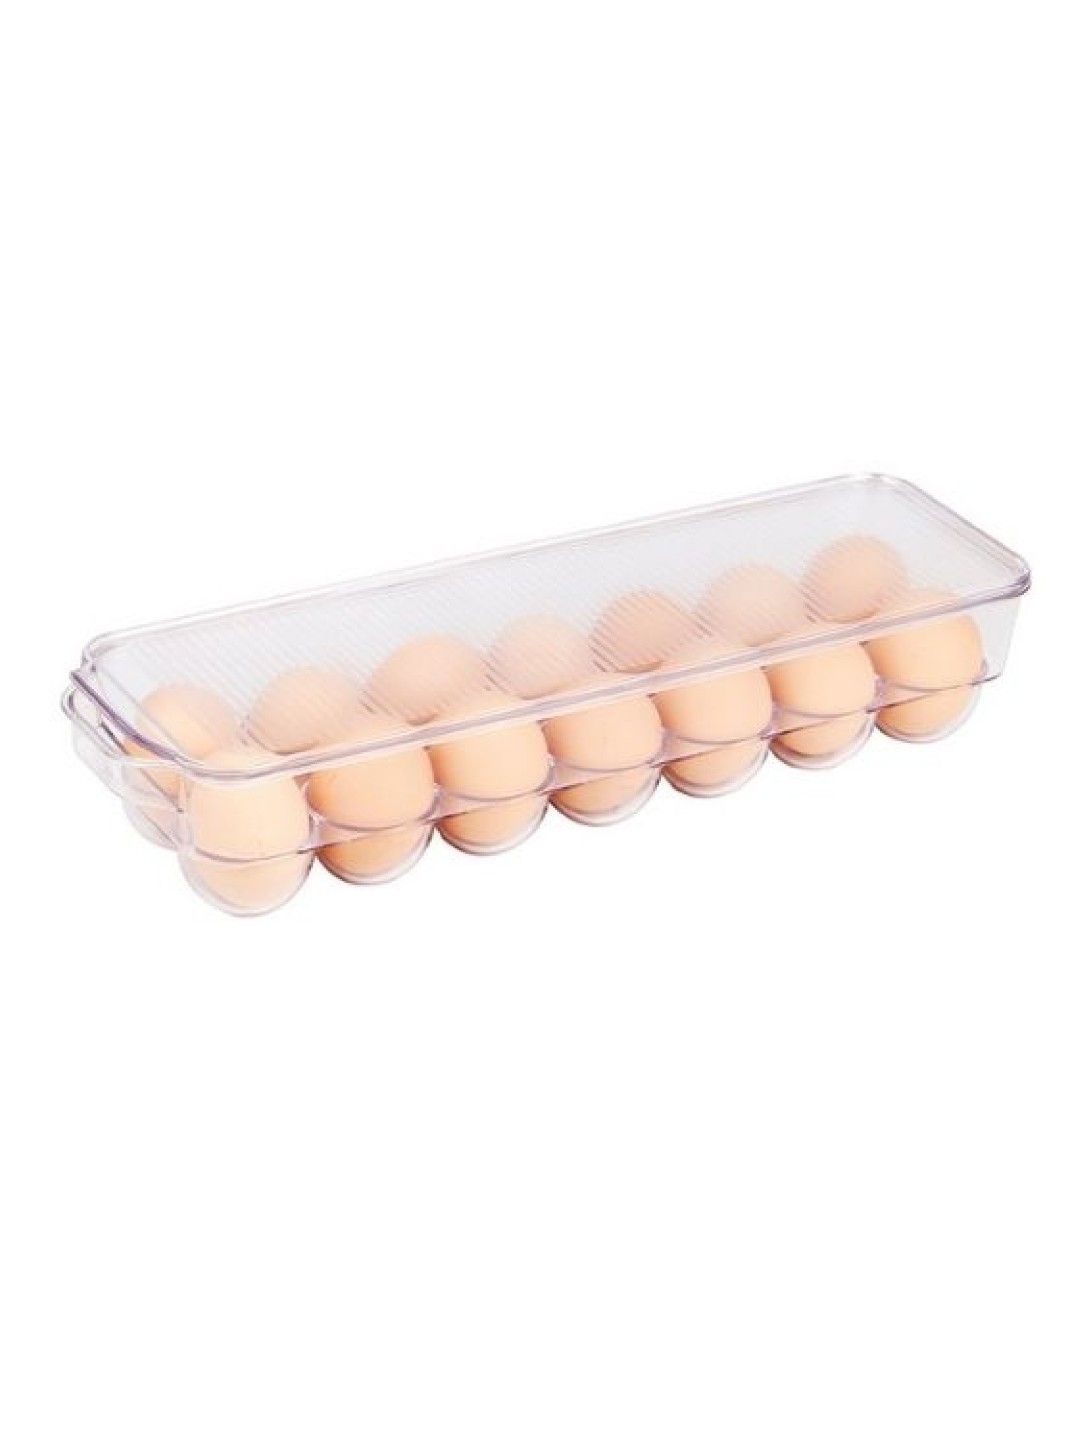 Sunbeams Lifestyle Nest Design Lab Egg Tray Refrigerator Organizer